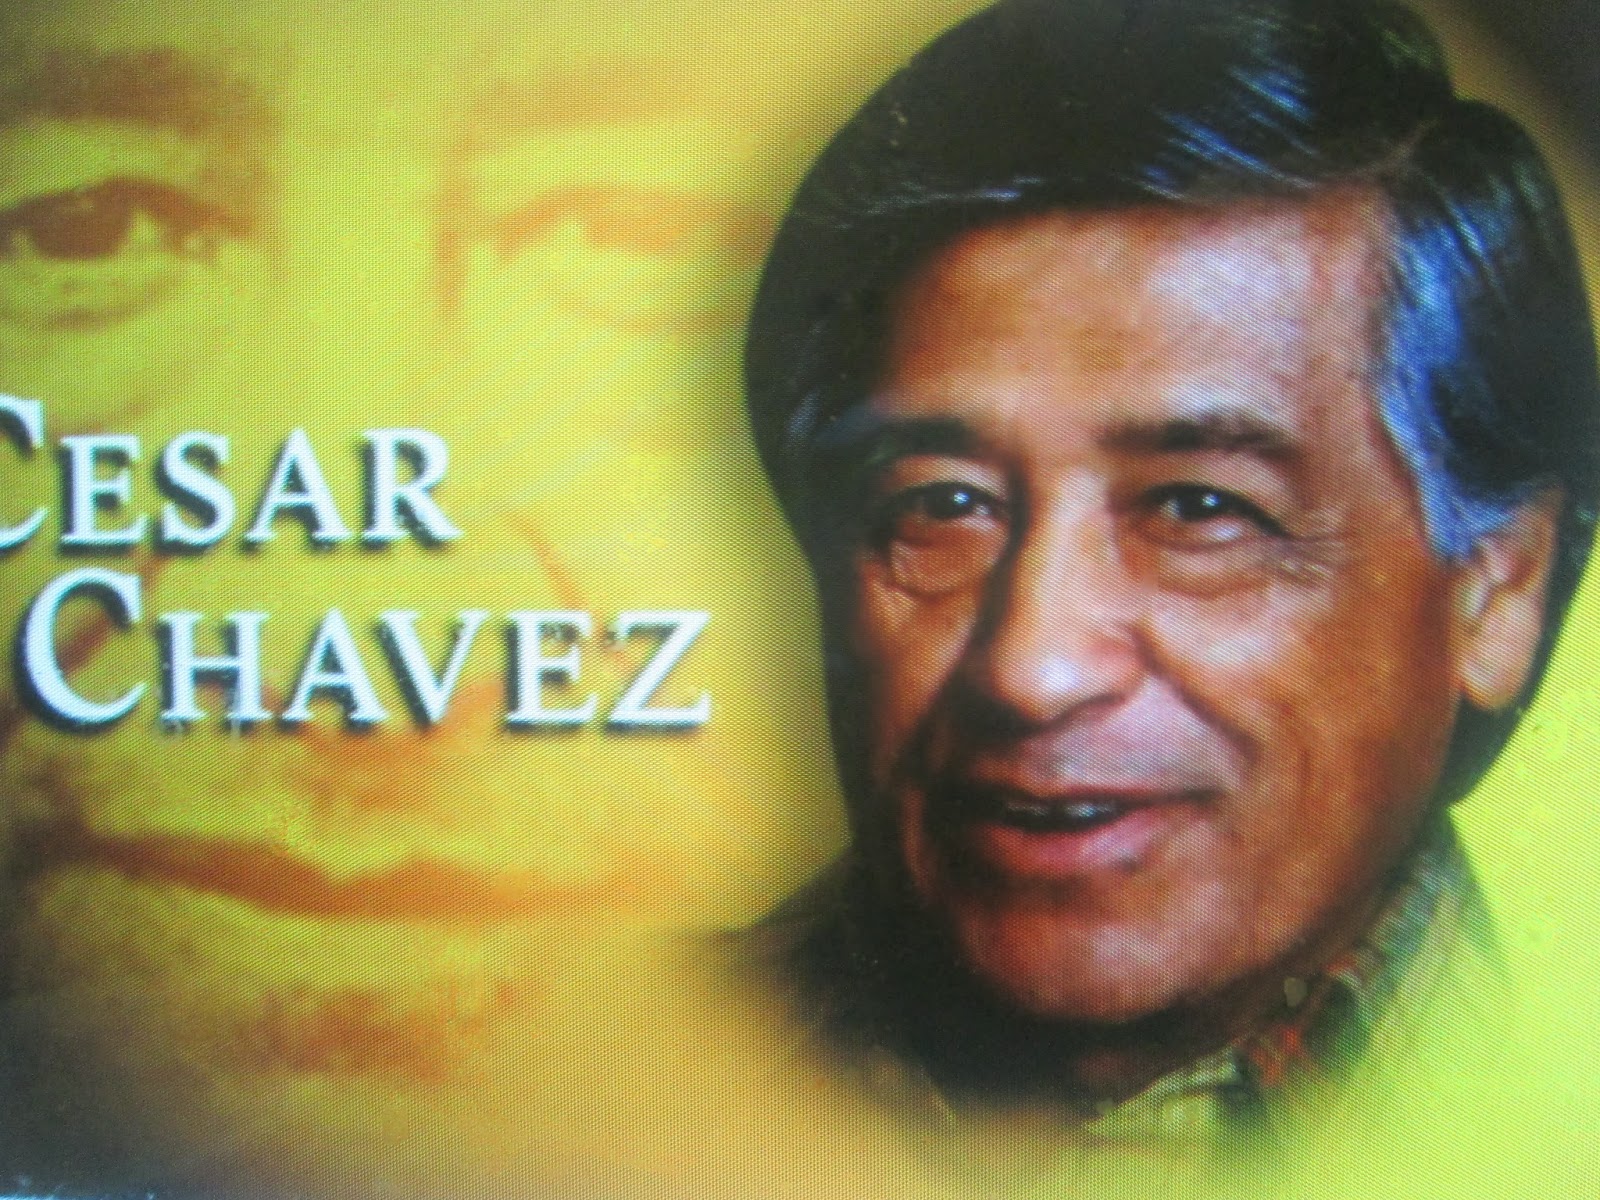 Why I Celebrate Cesar Chavez